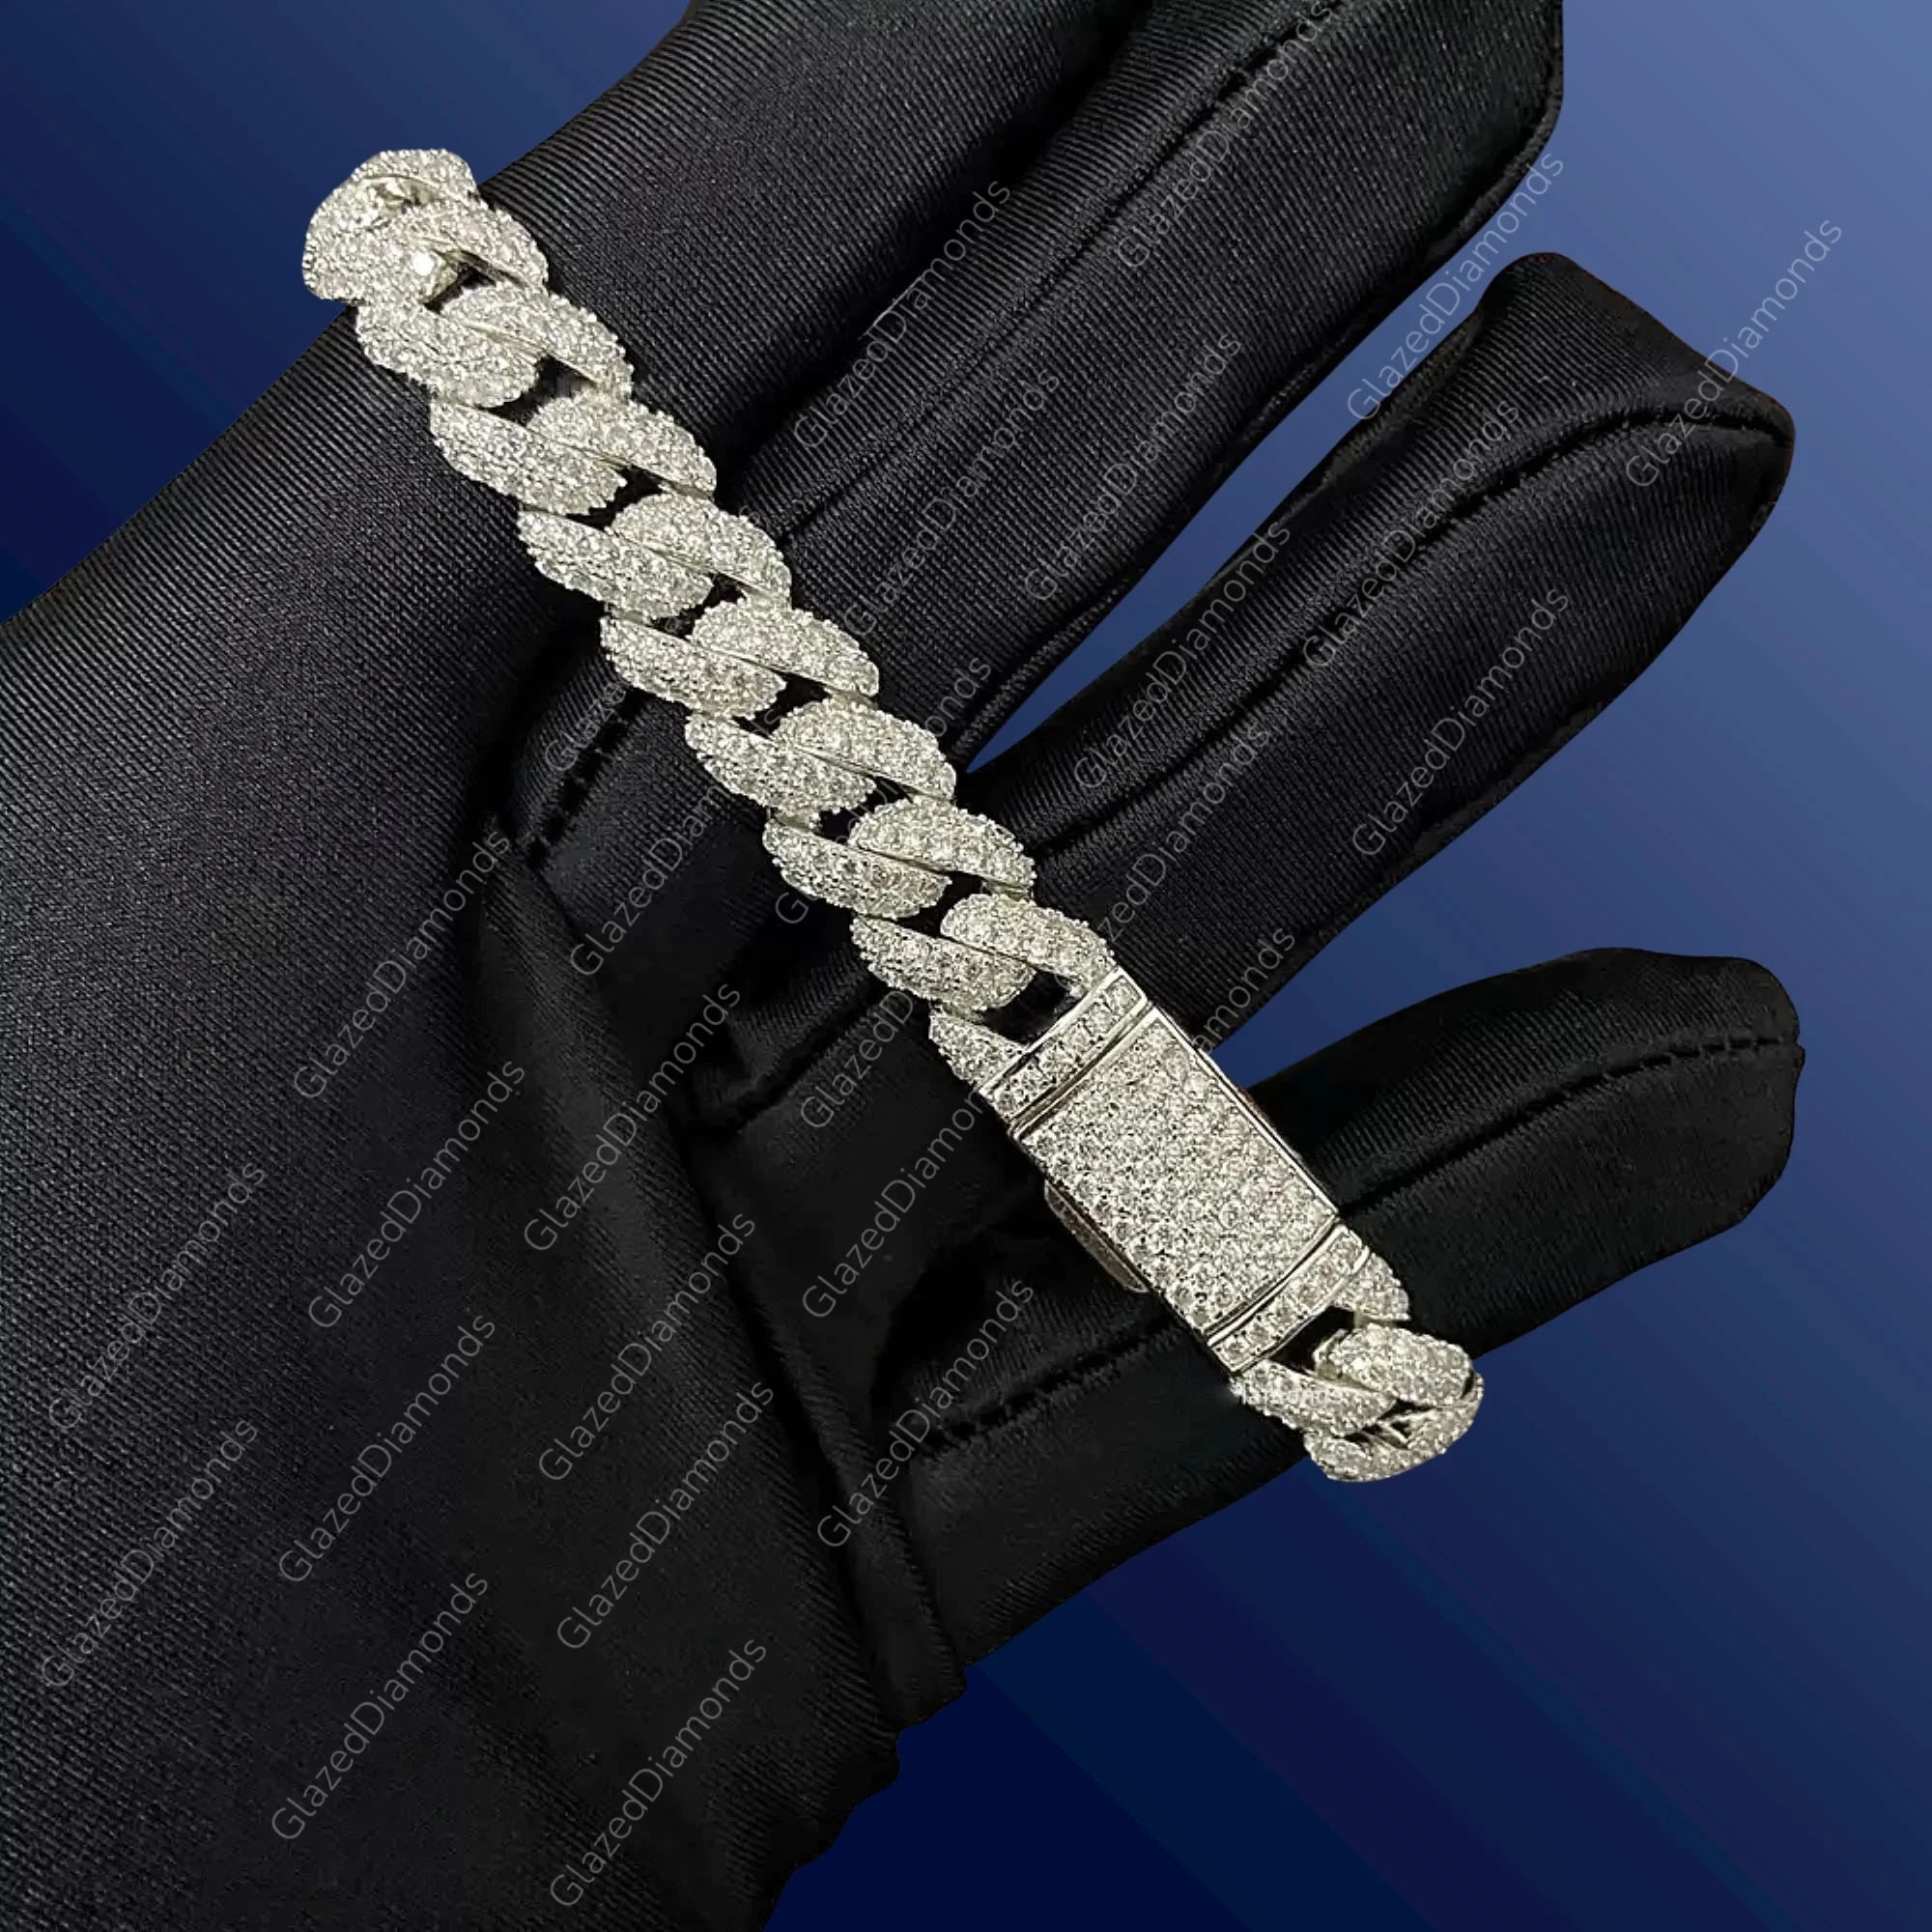 10mm Miami Cuban Link Iced Out Moissanite Diamond Men's Bracelet